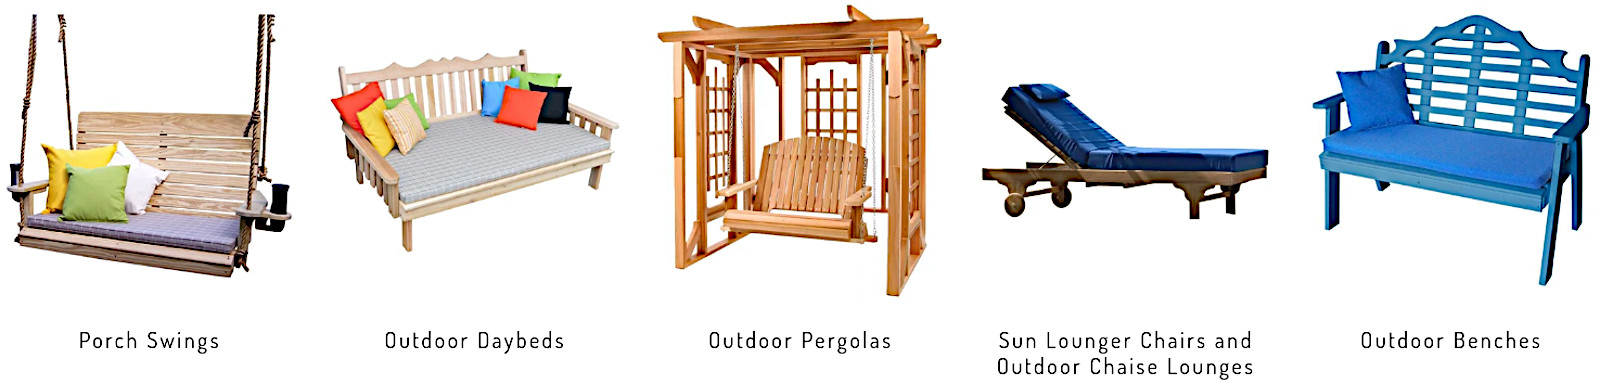 Bargains outdoor furniture